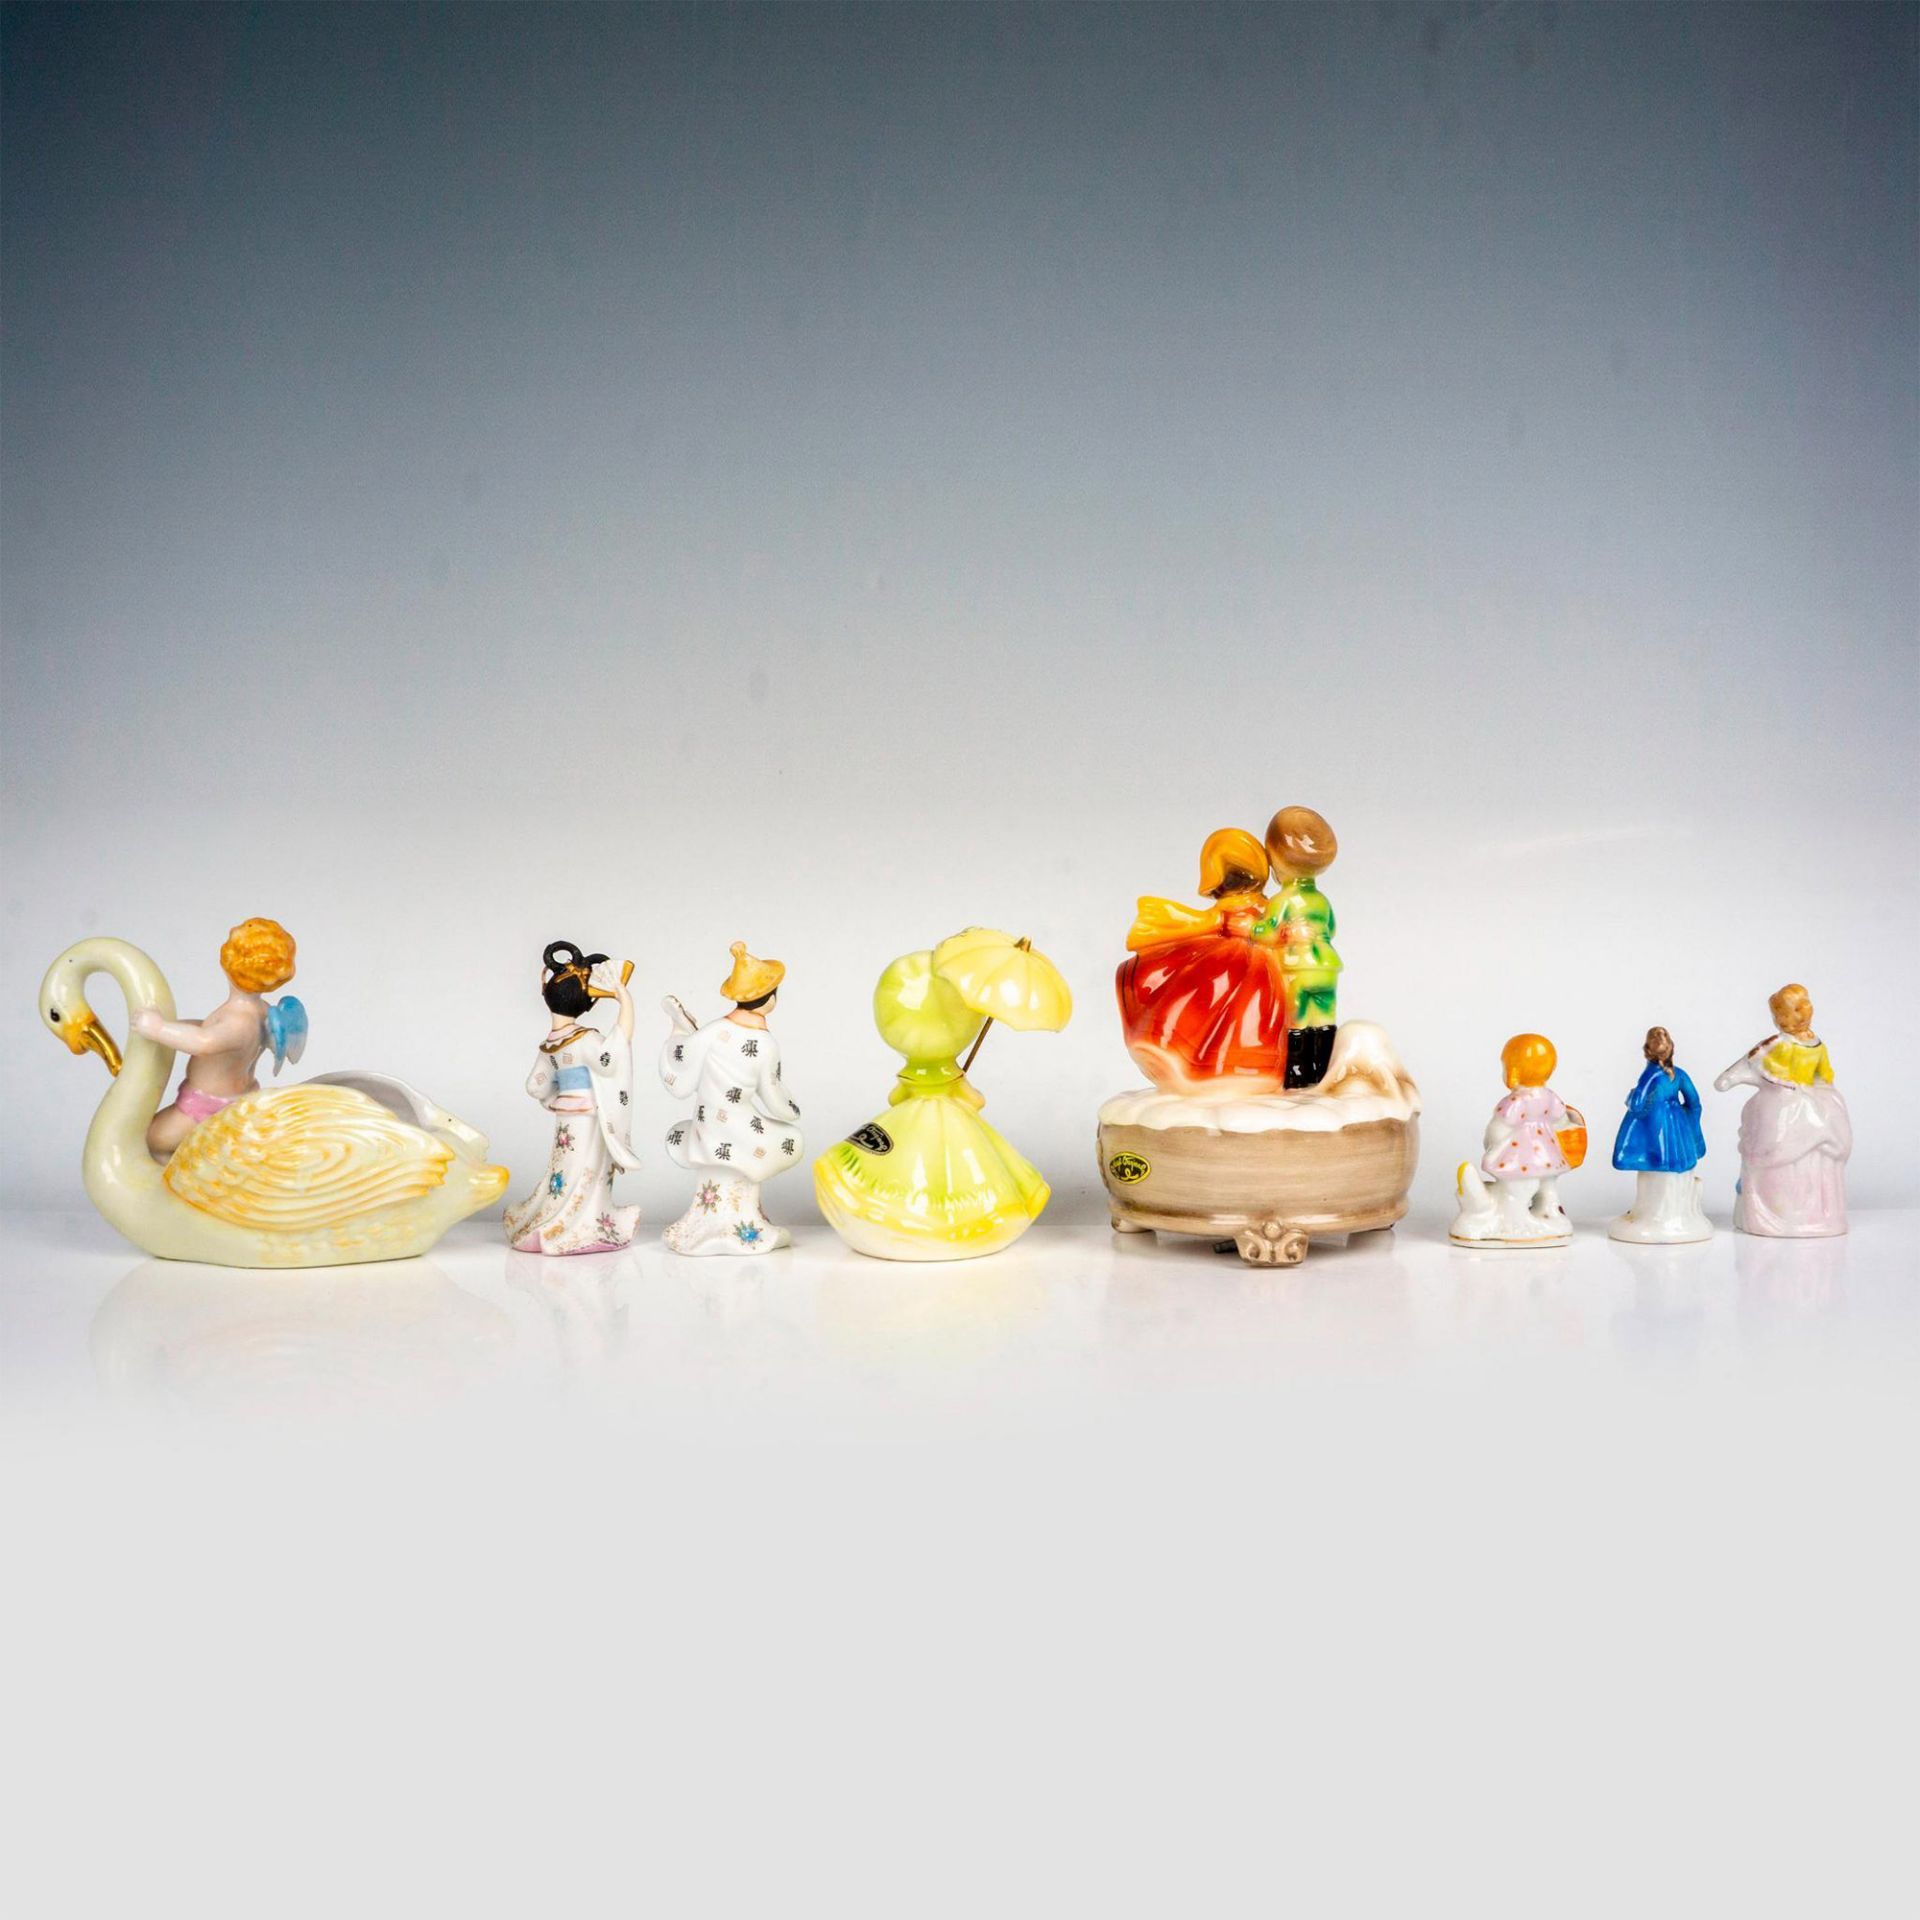 8pc Japanese Porcelain Figurines + Dish - Image 2 of 3